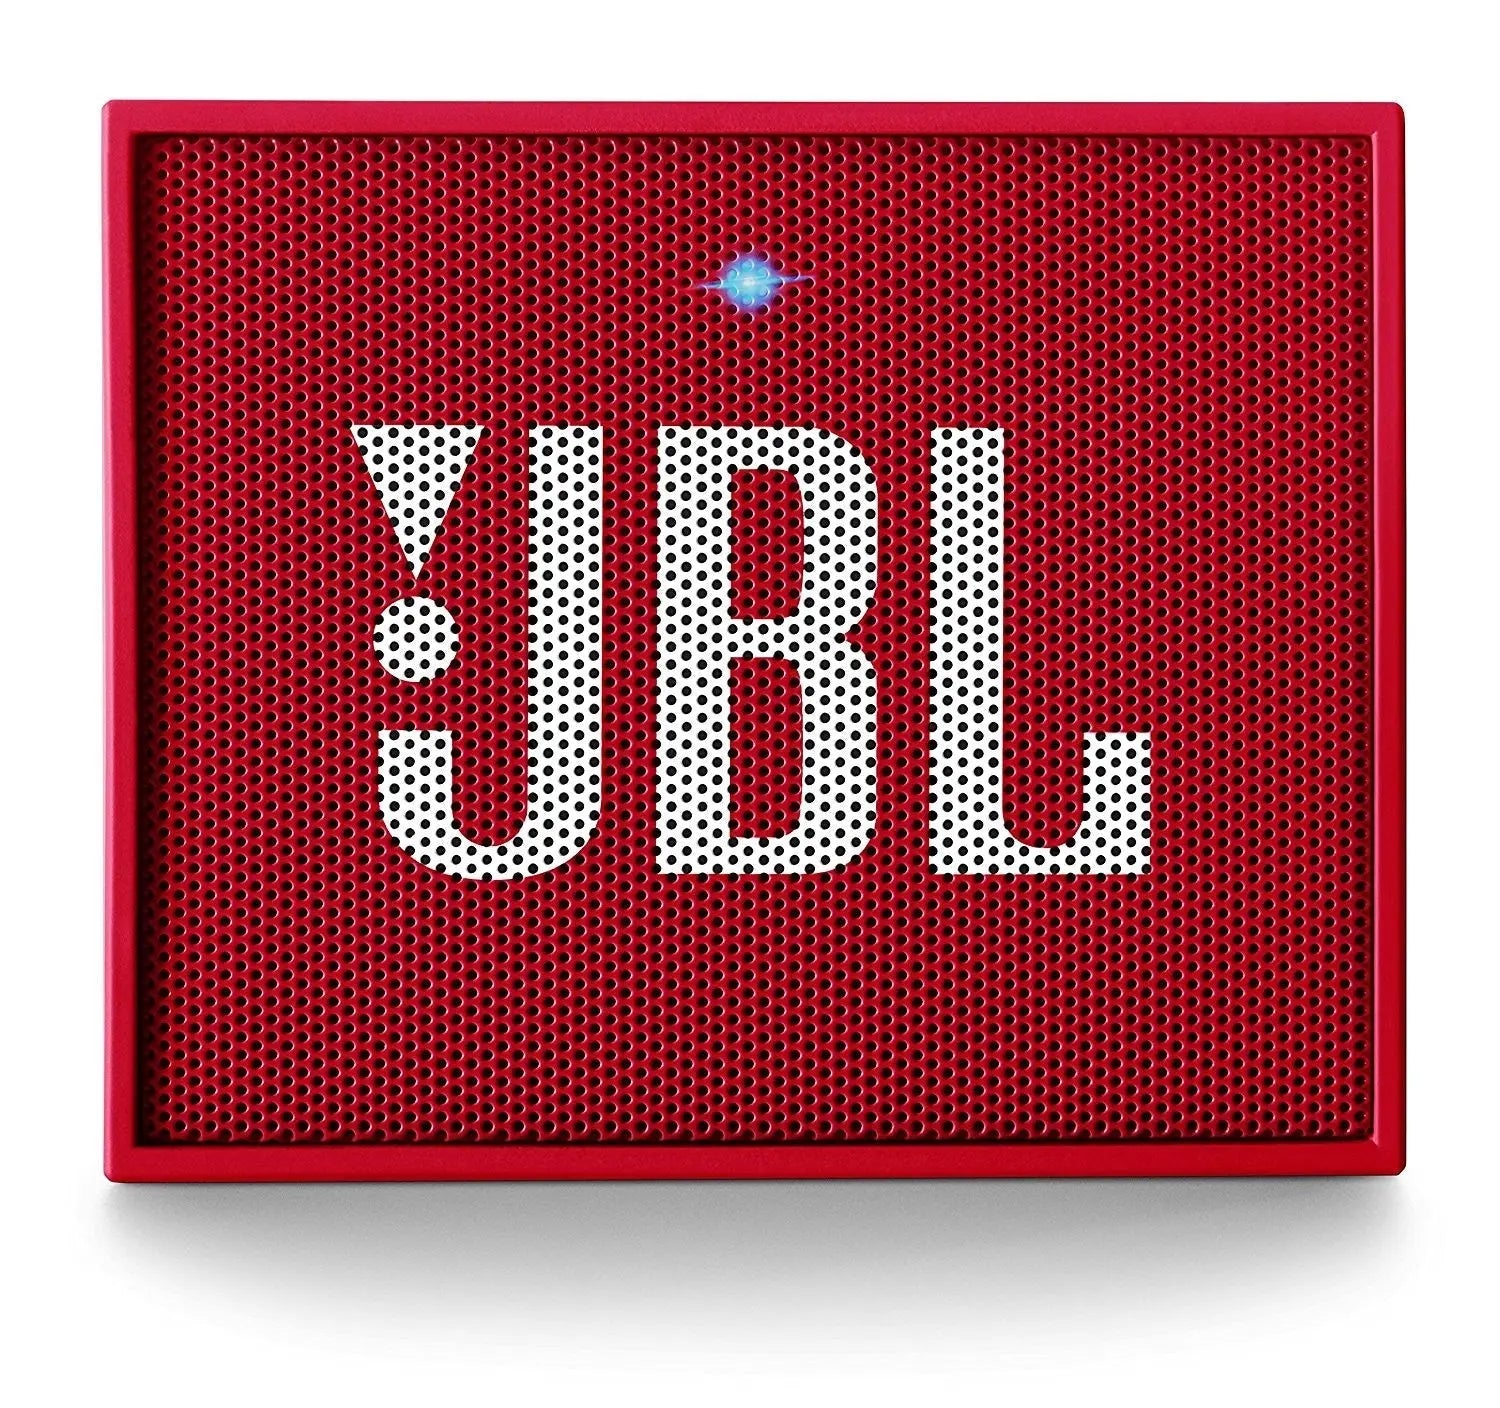 Enceinte Bluetooth JBL Go ROUGE comptact sans fil JBL